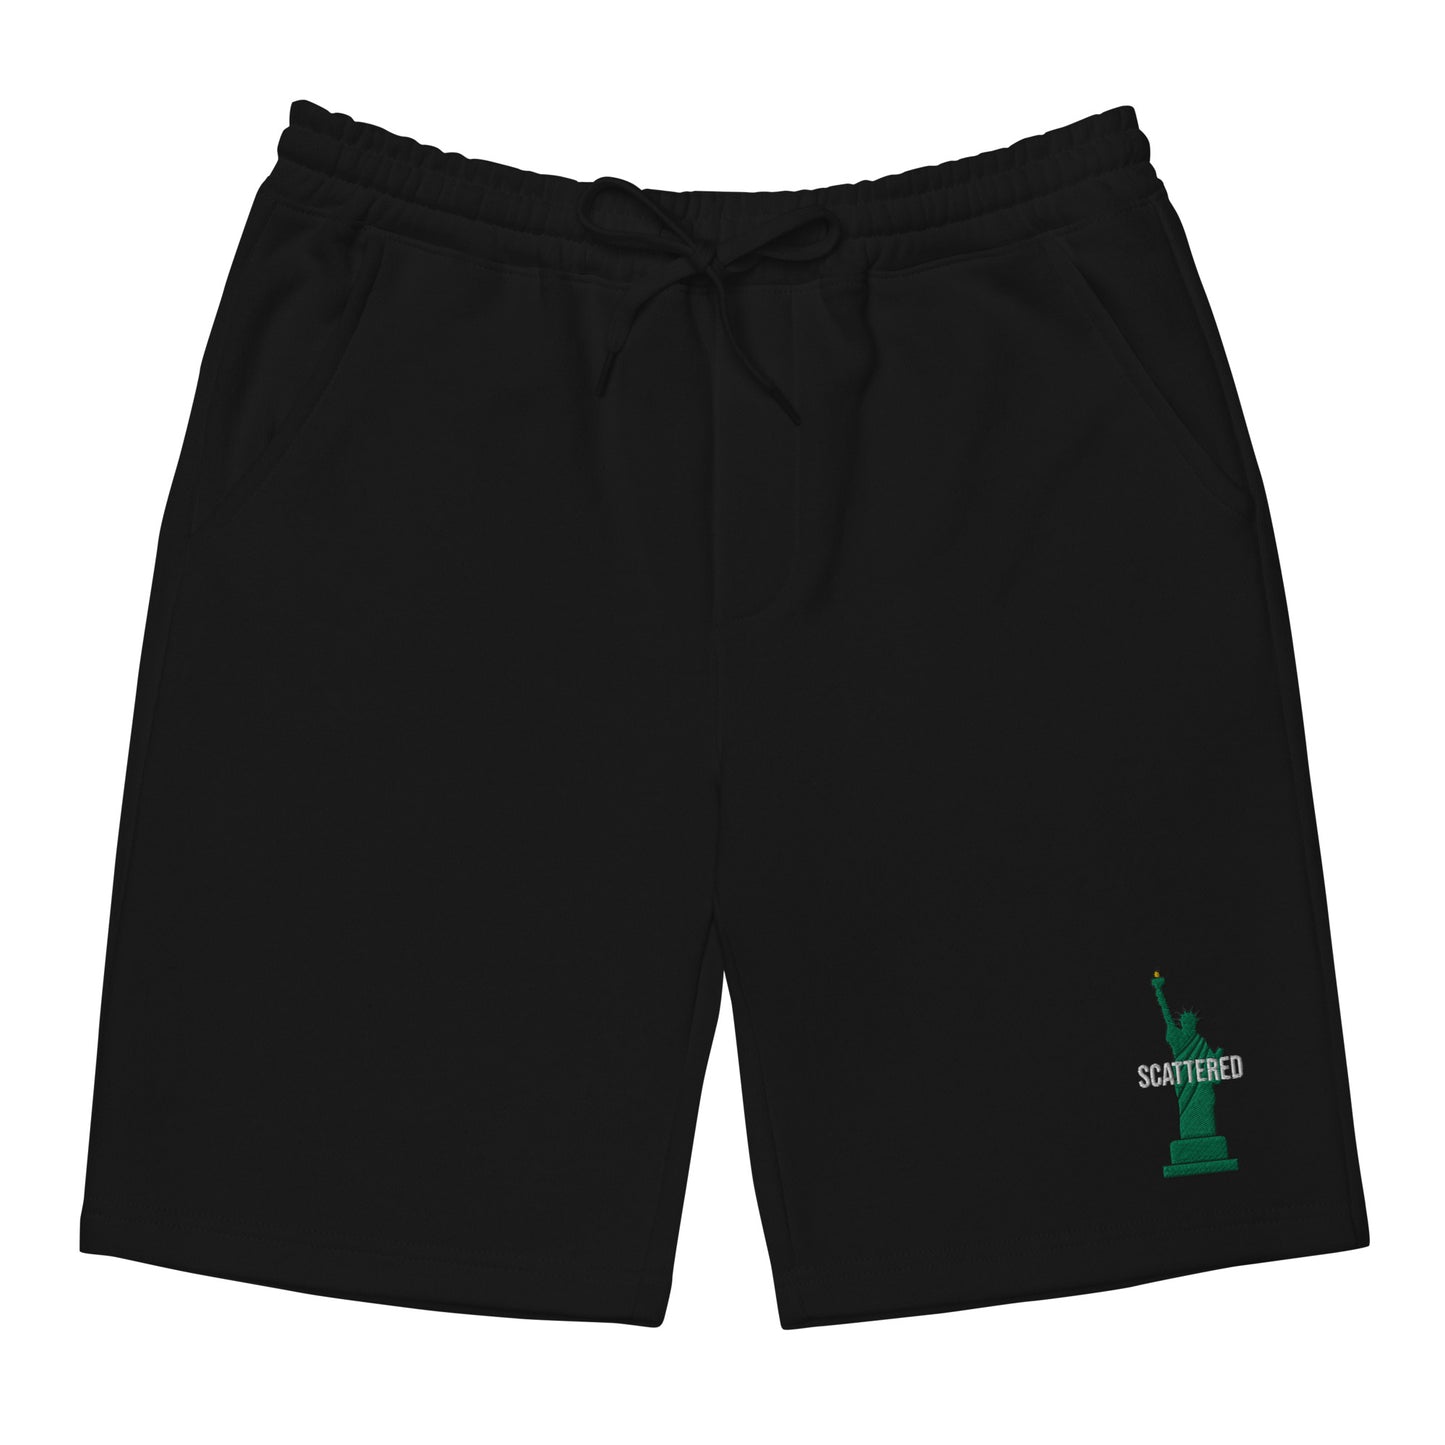 Statue of Liberty Logo Embroidered Premium Sweat Shorts